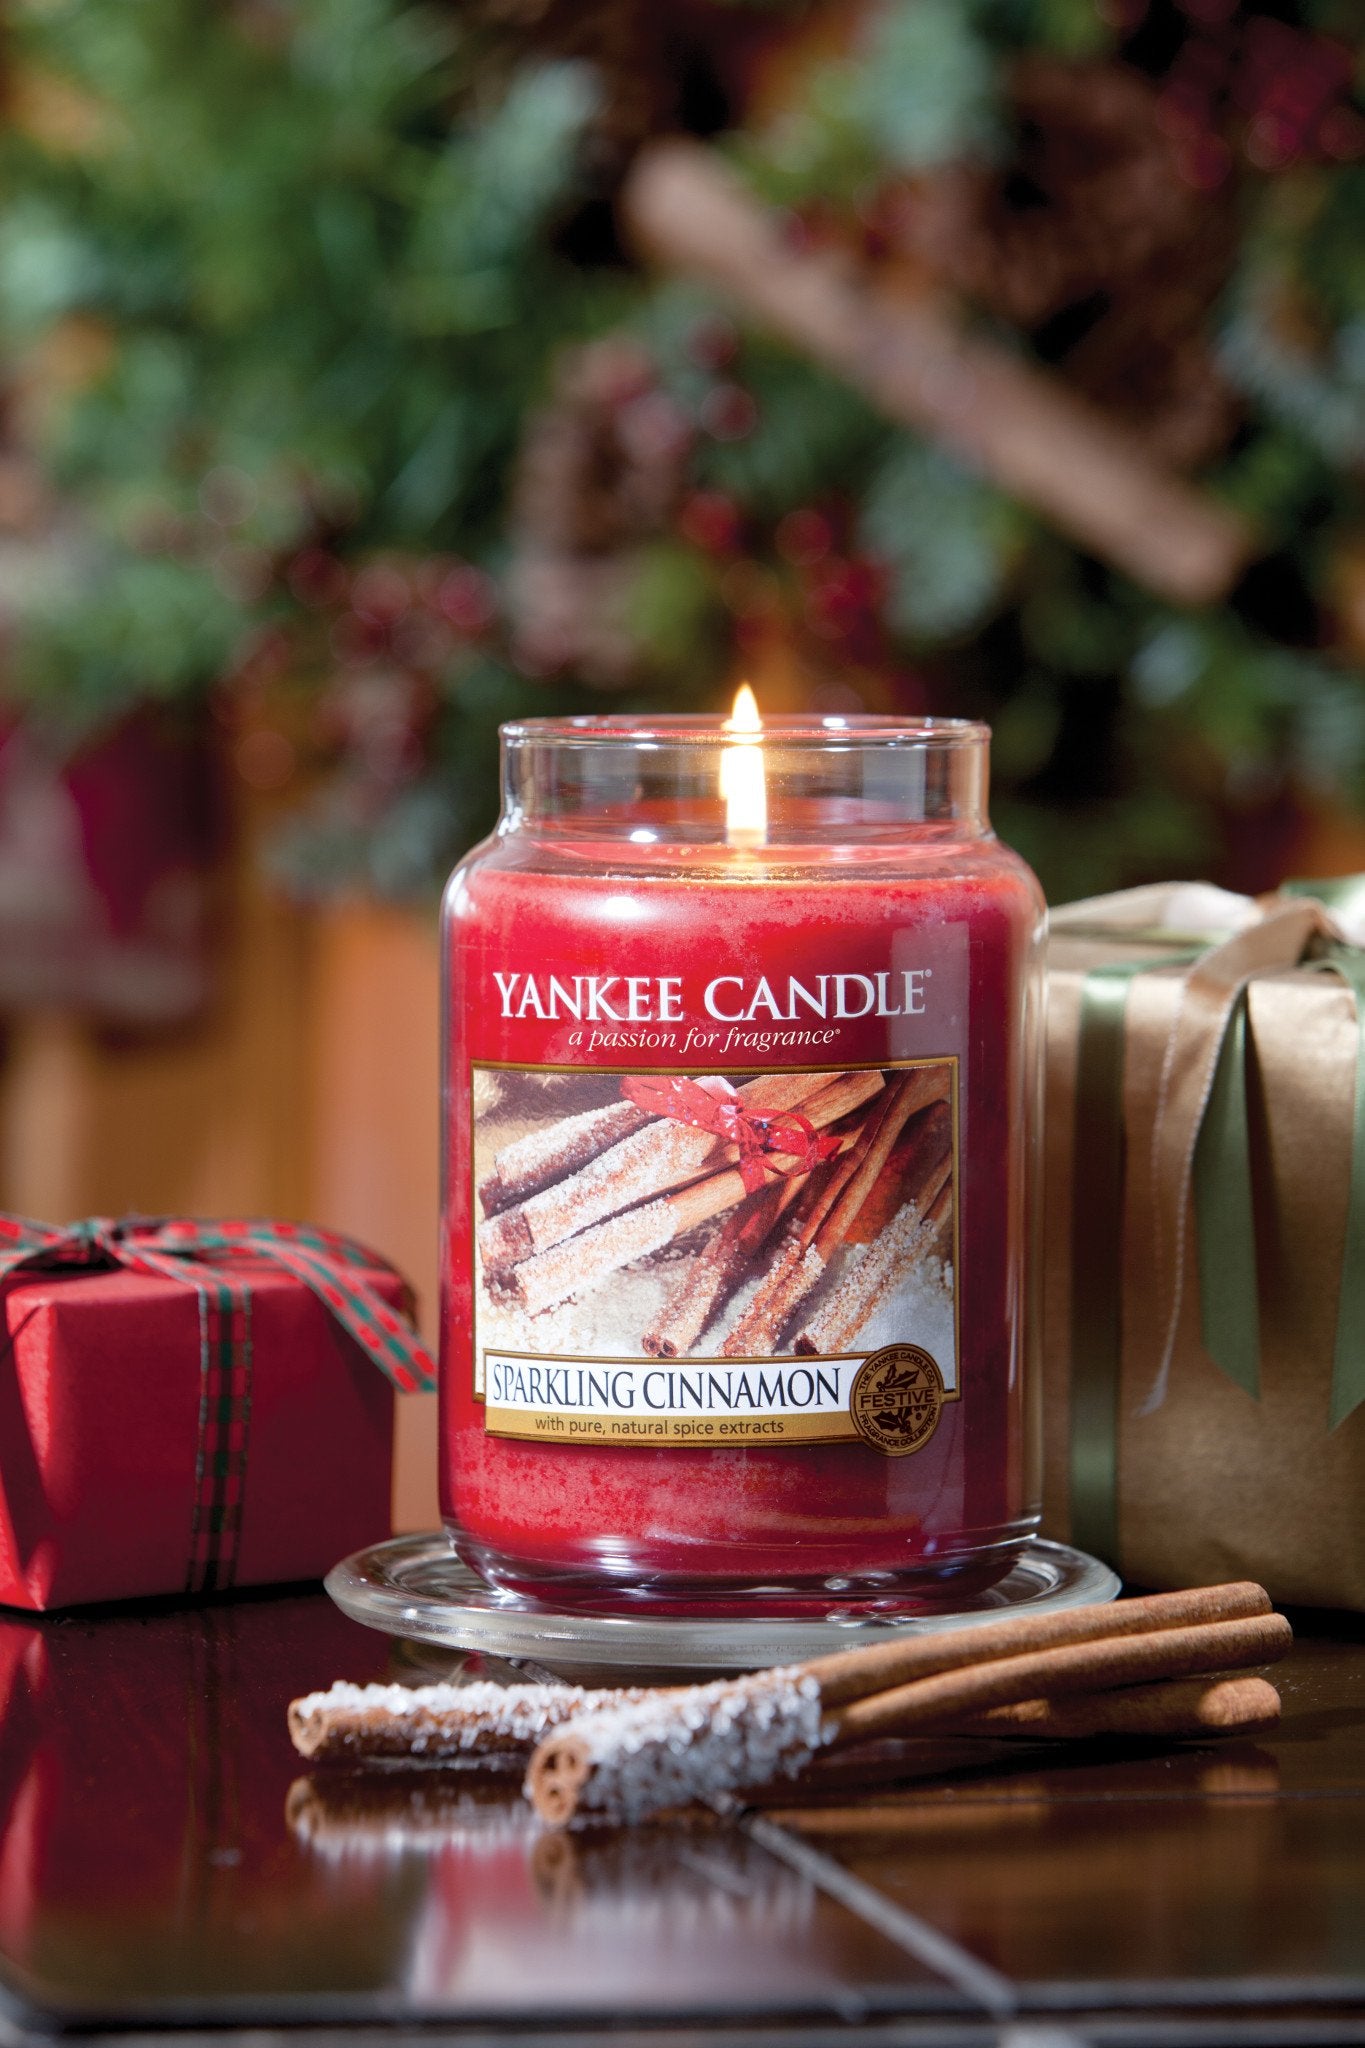 Sparkling cinnamon - Yankee Candle - Tart cera da fondere – Candle